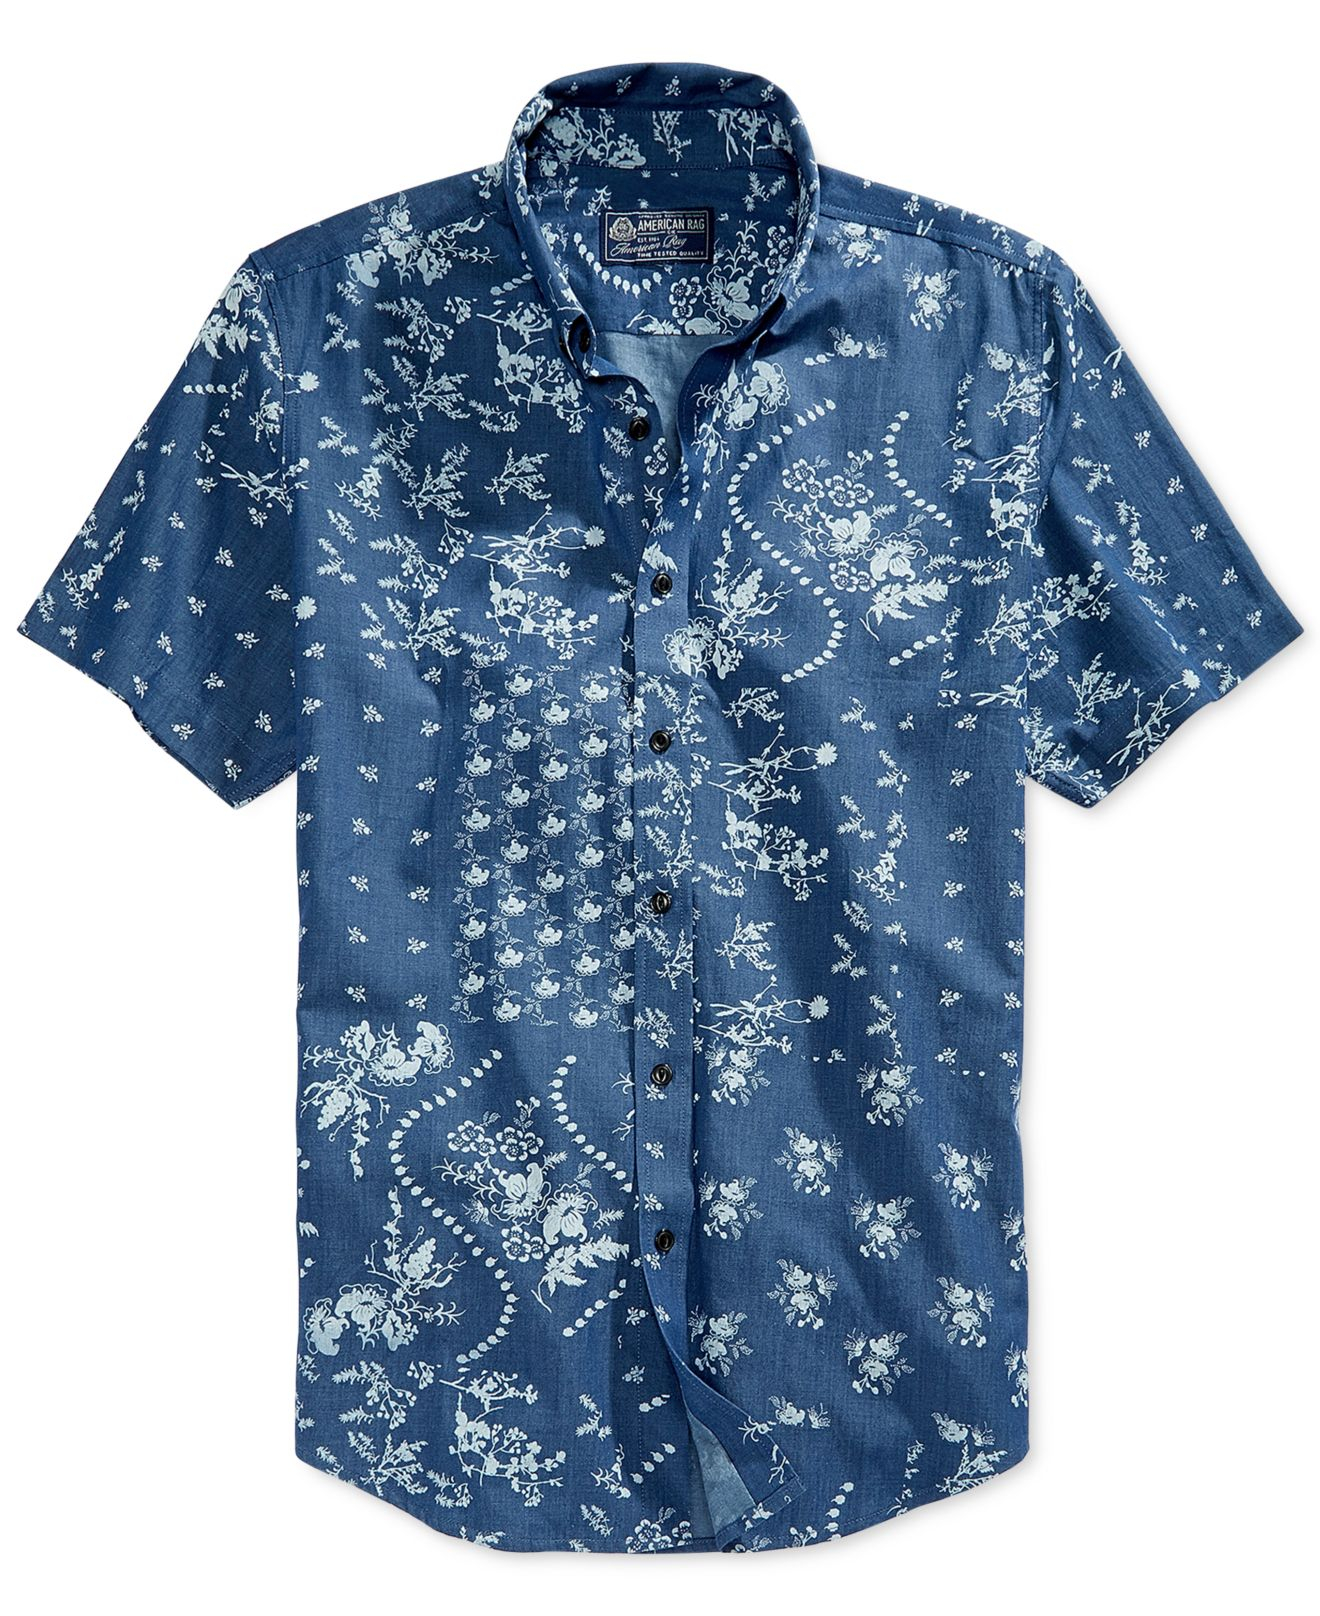 American Rag Bandana Print Shirt in Blue for Men - Lyst